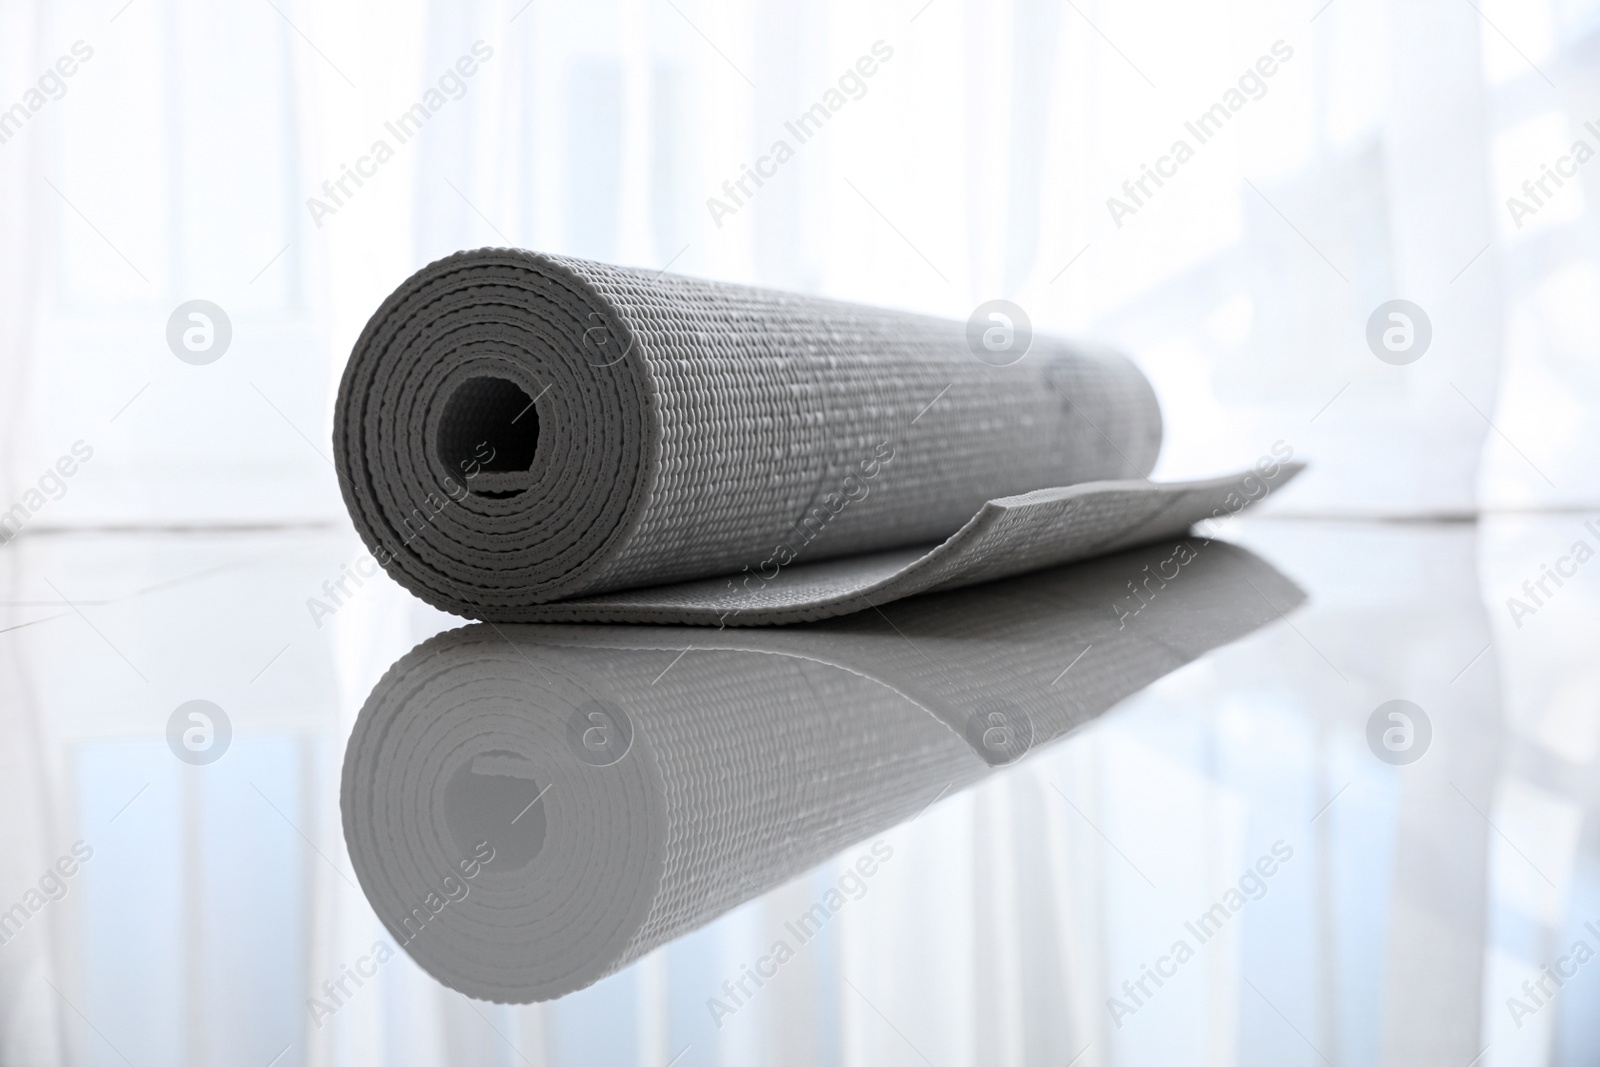 Photo of Rolled karemat or fitness mat on tiled floor